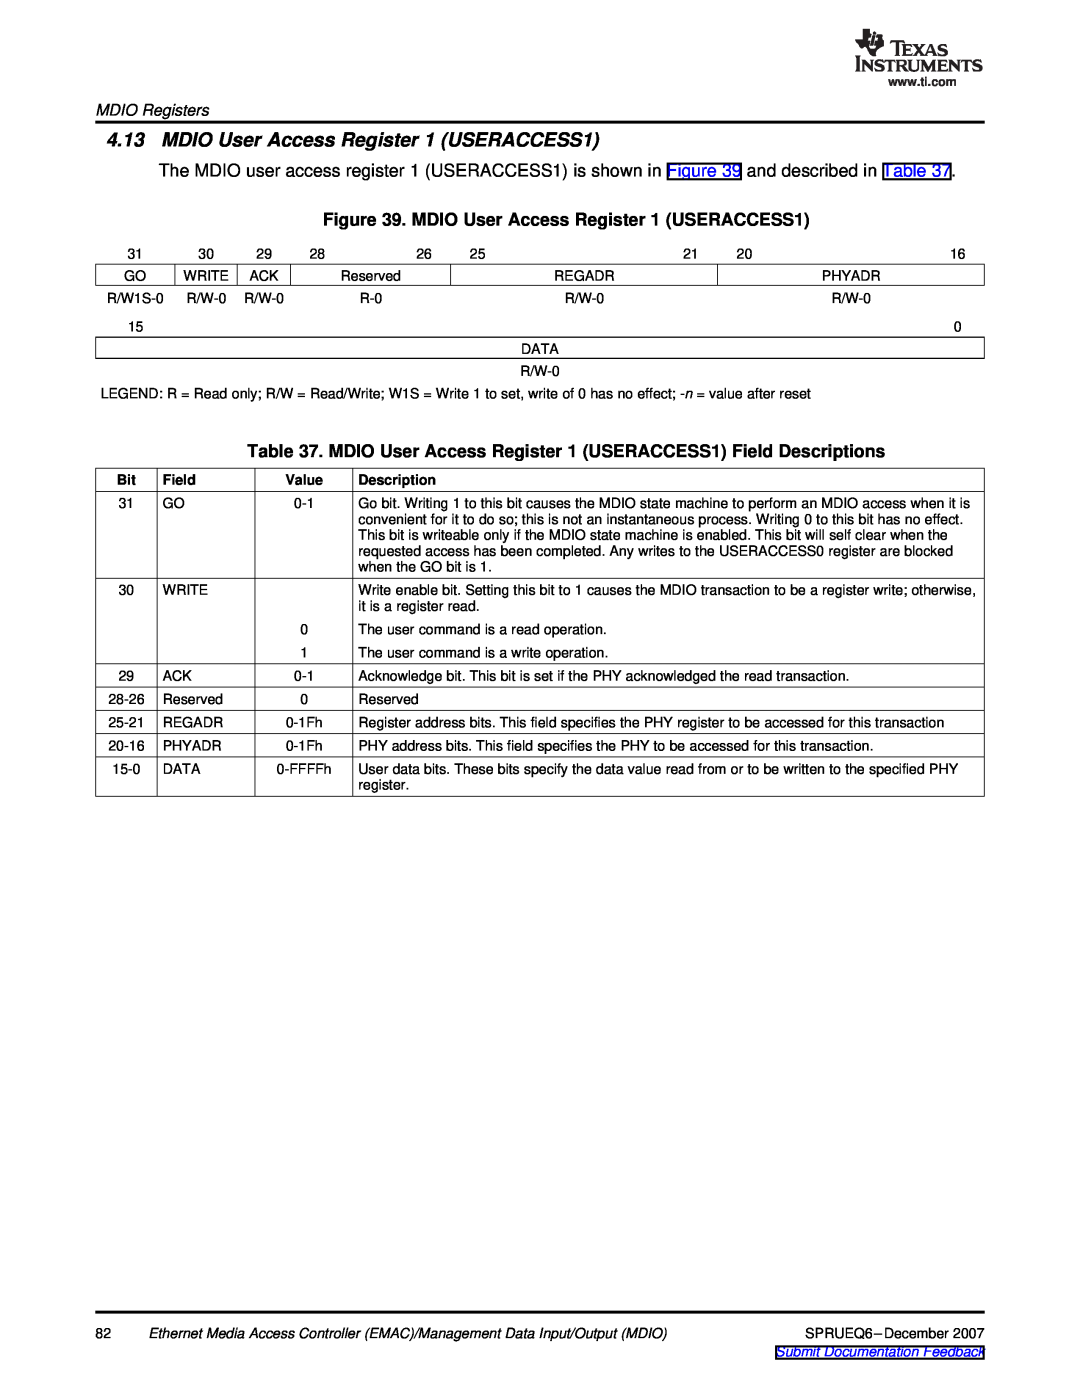 Texas Instruments TMS320DM646x manual MDIO User Access Register 1 USERACCESS1, MDIO Registers, Field, Description 